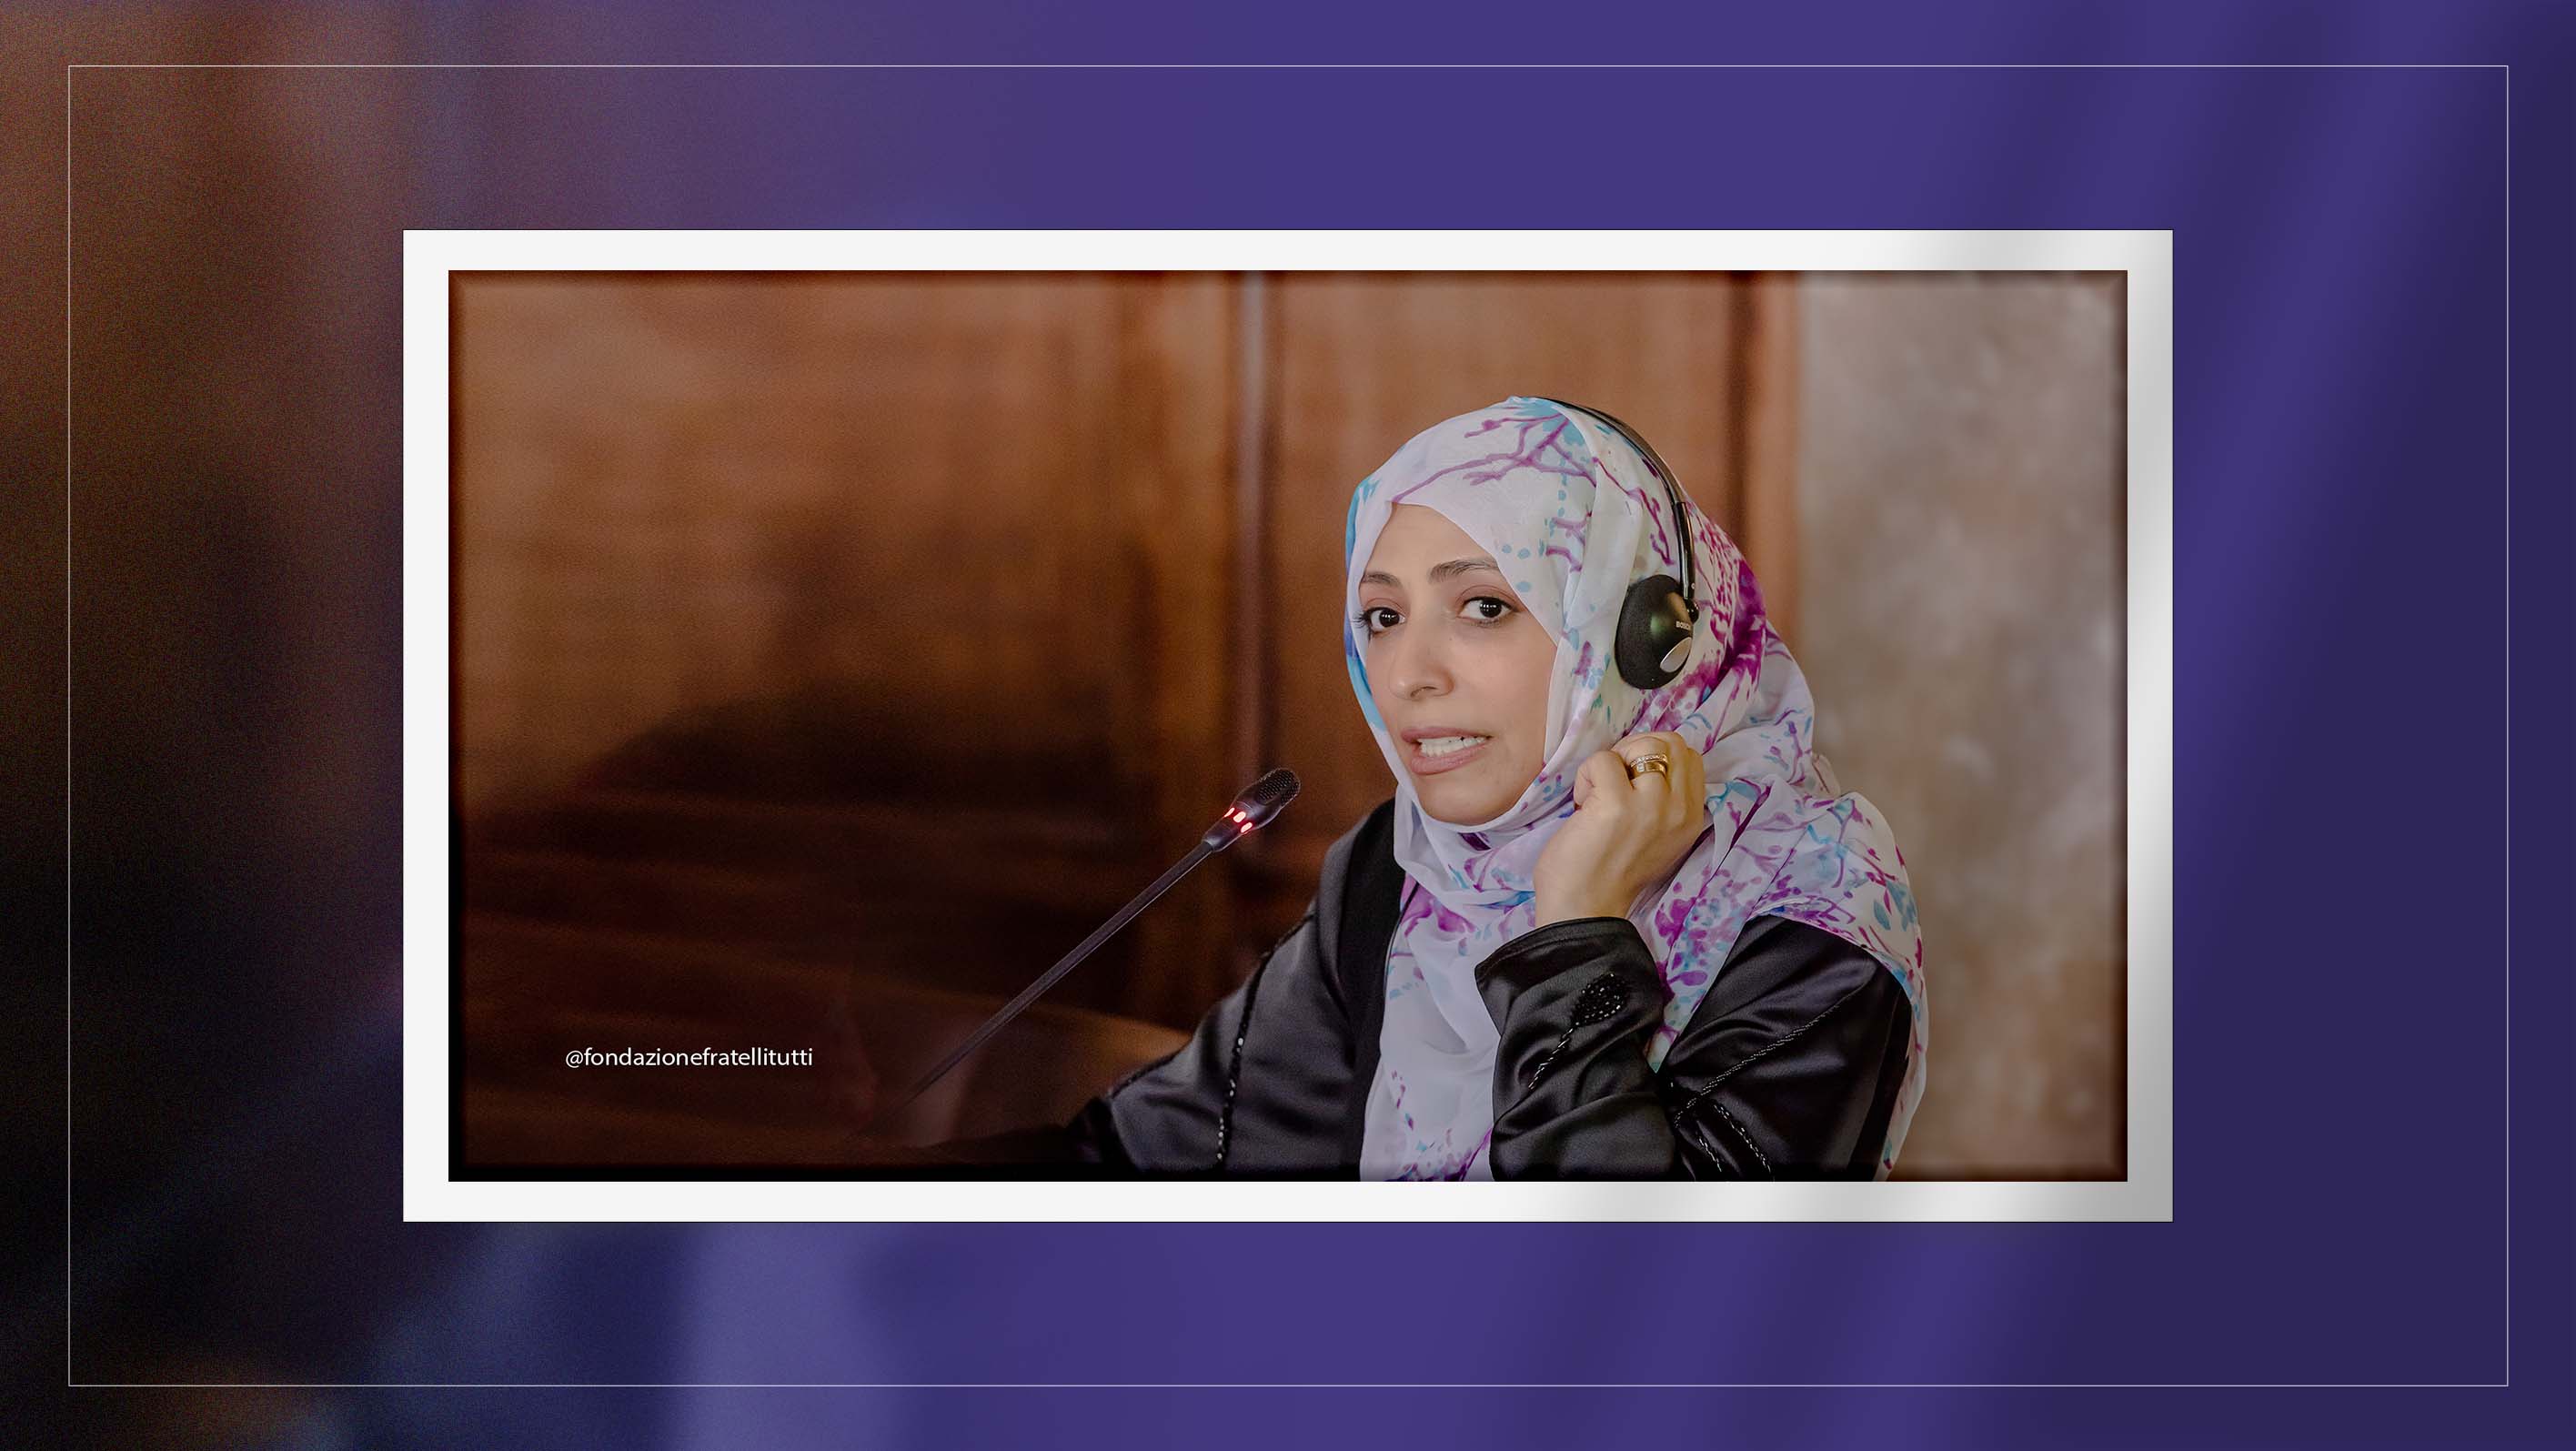 Tawakkol Karman speaks at Vatican meeting on "human fraternity"